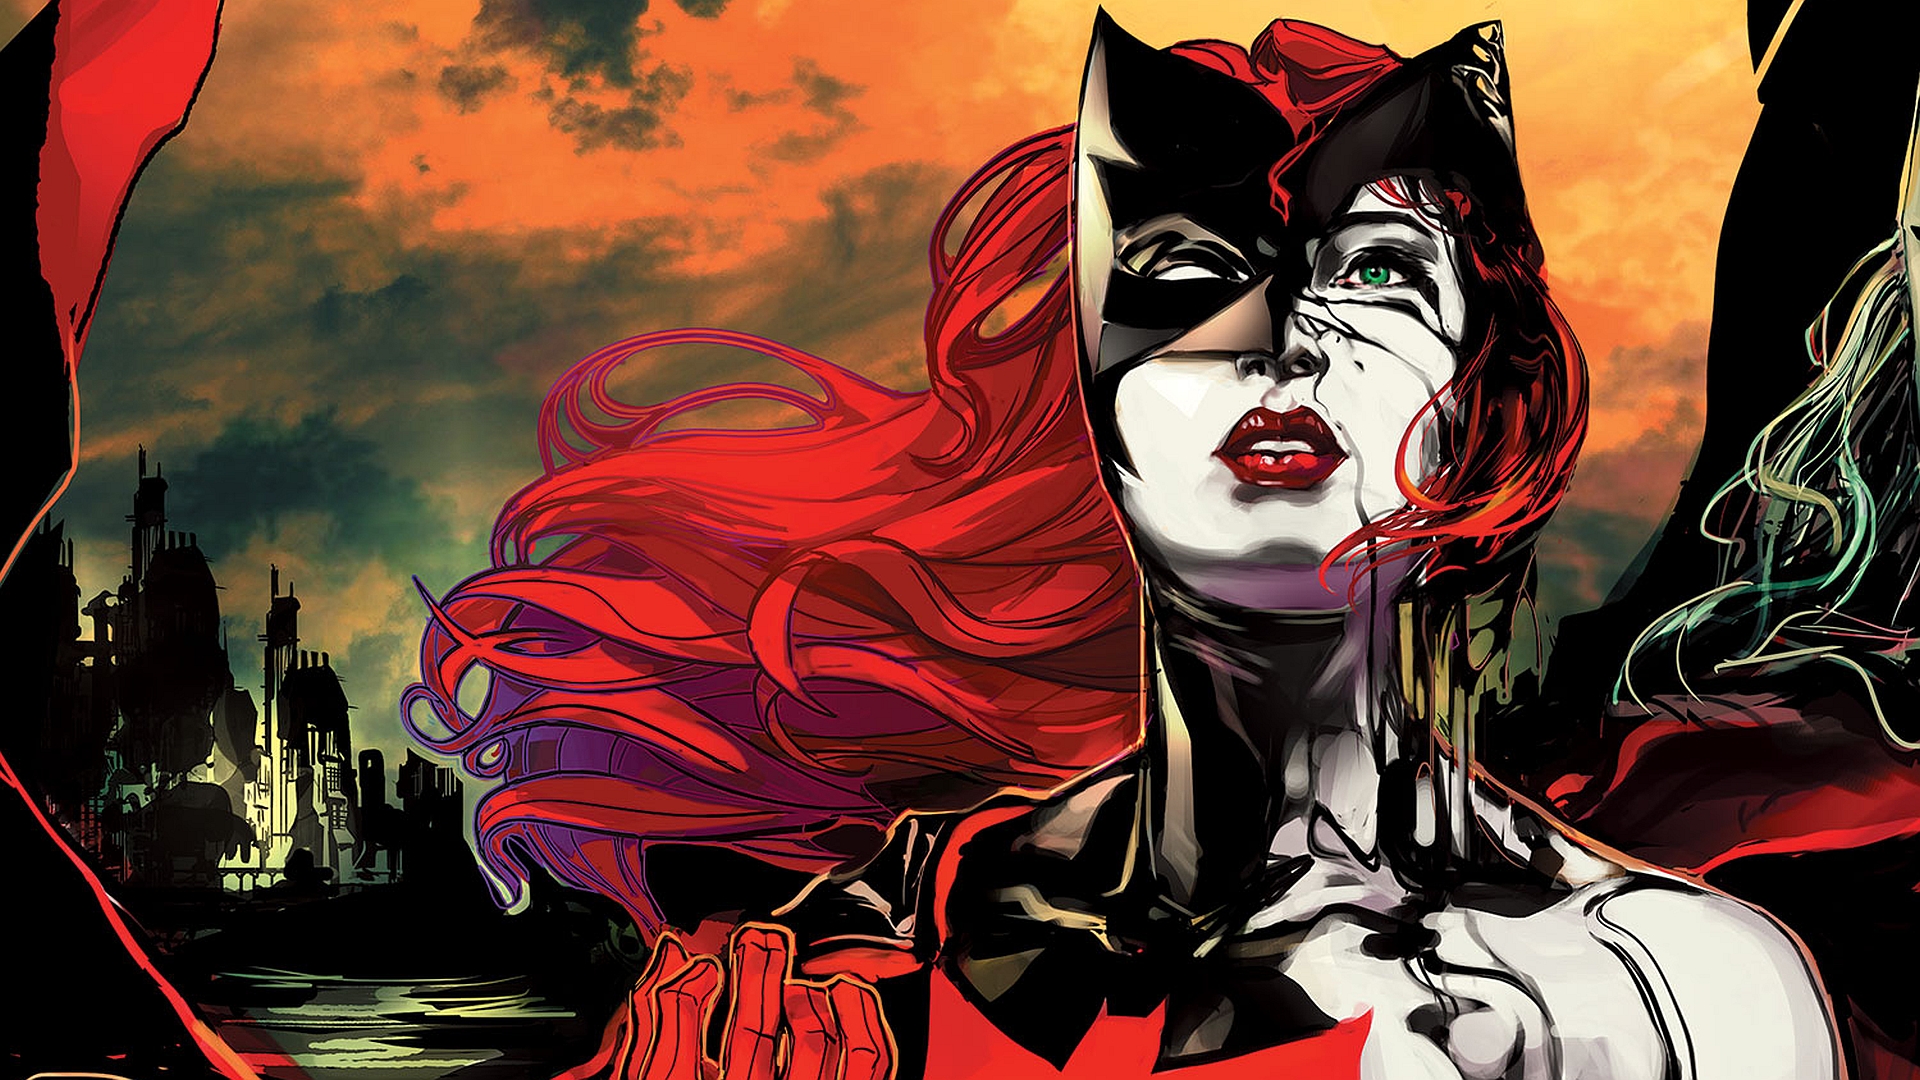 batwoman壁紙,架空の人物,バットマン,スーパーヒーロー,図,超悪役